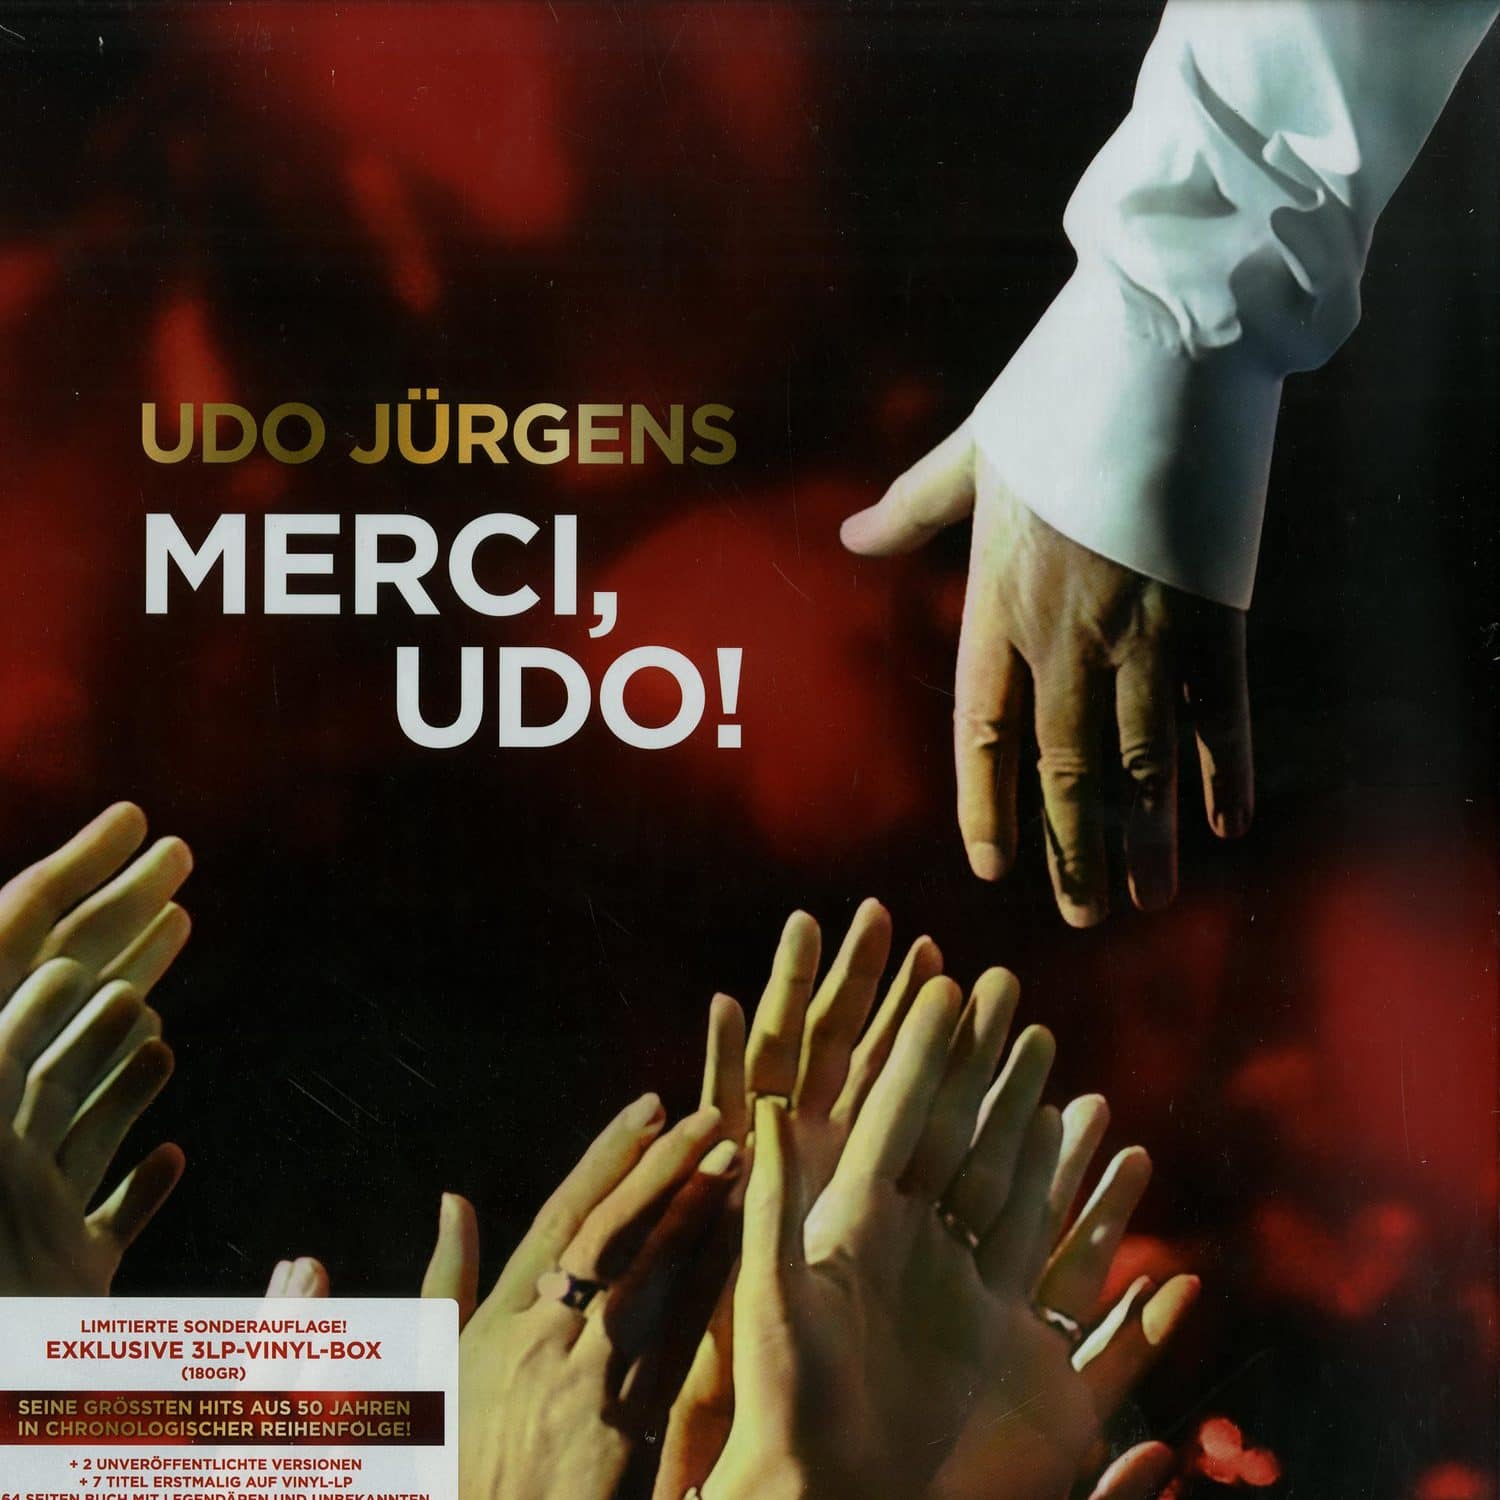 Udo Juergens - MERCI, UDO! 